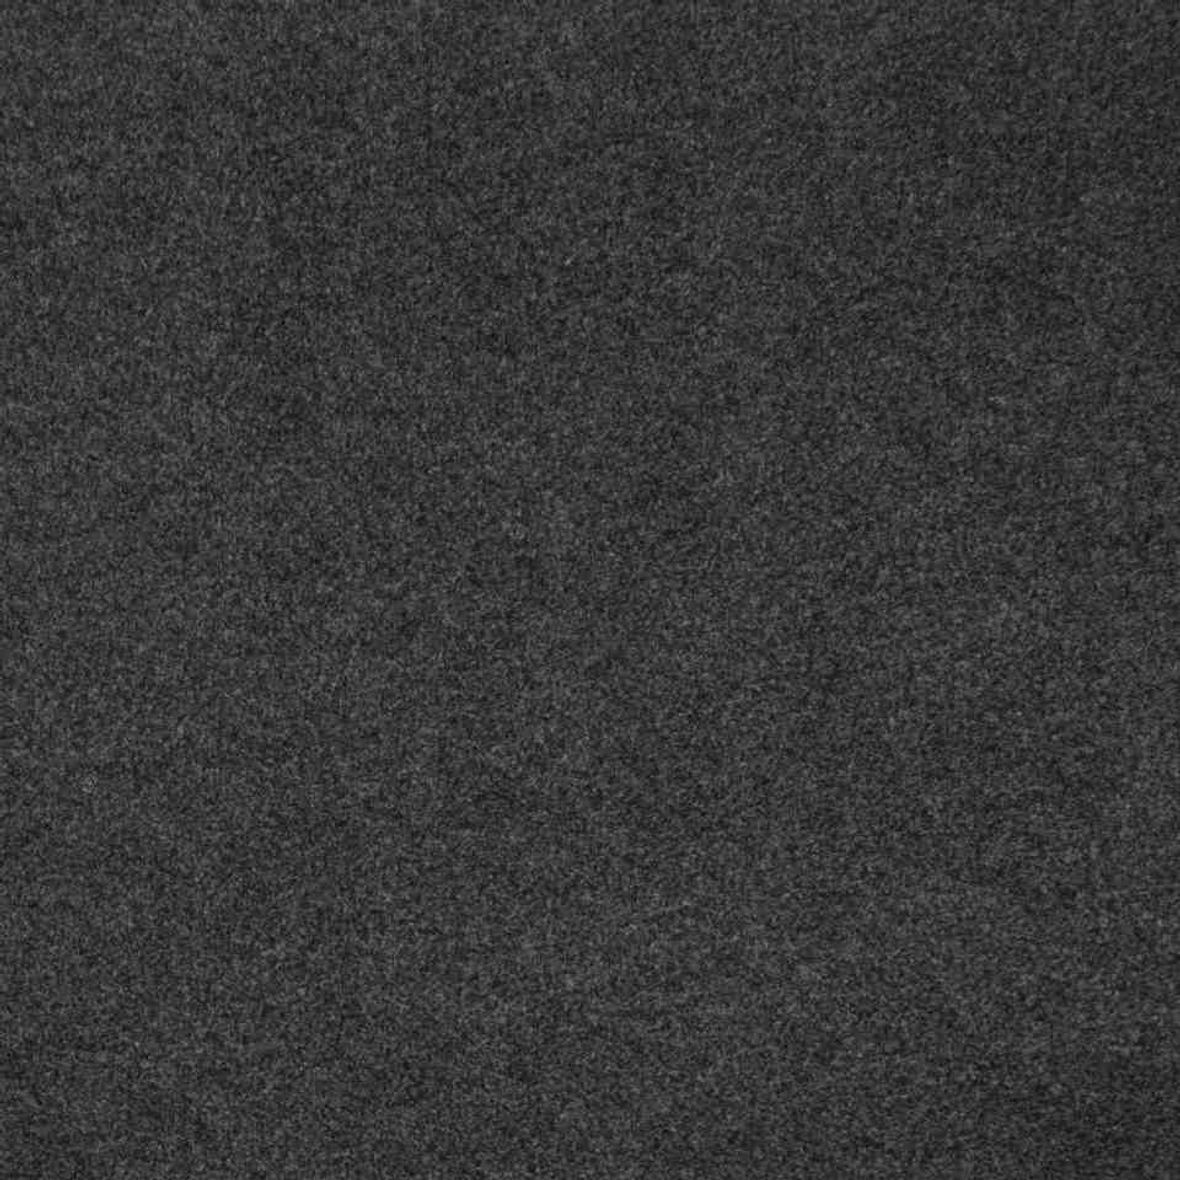 Metrážny koberec AUTOSOFT - sivý